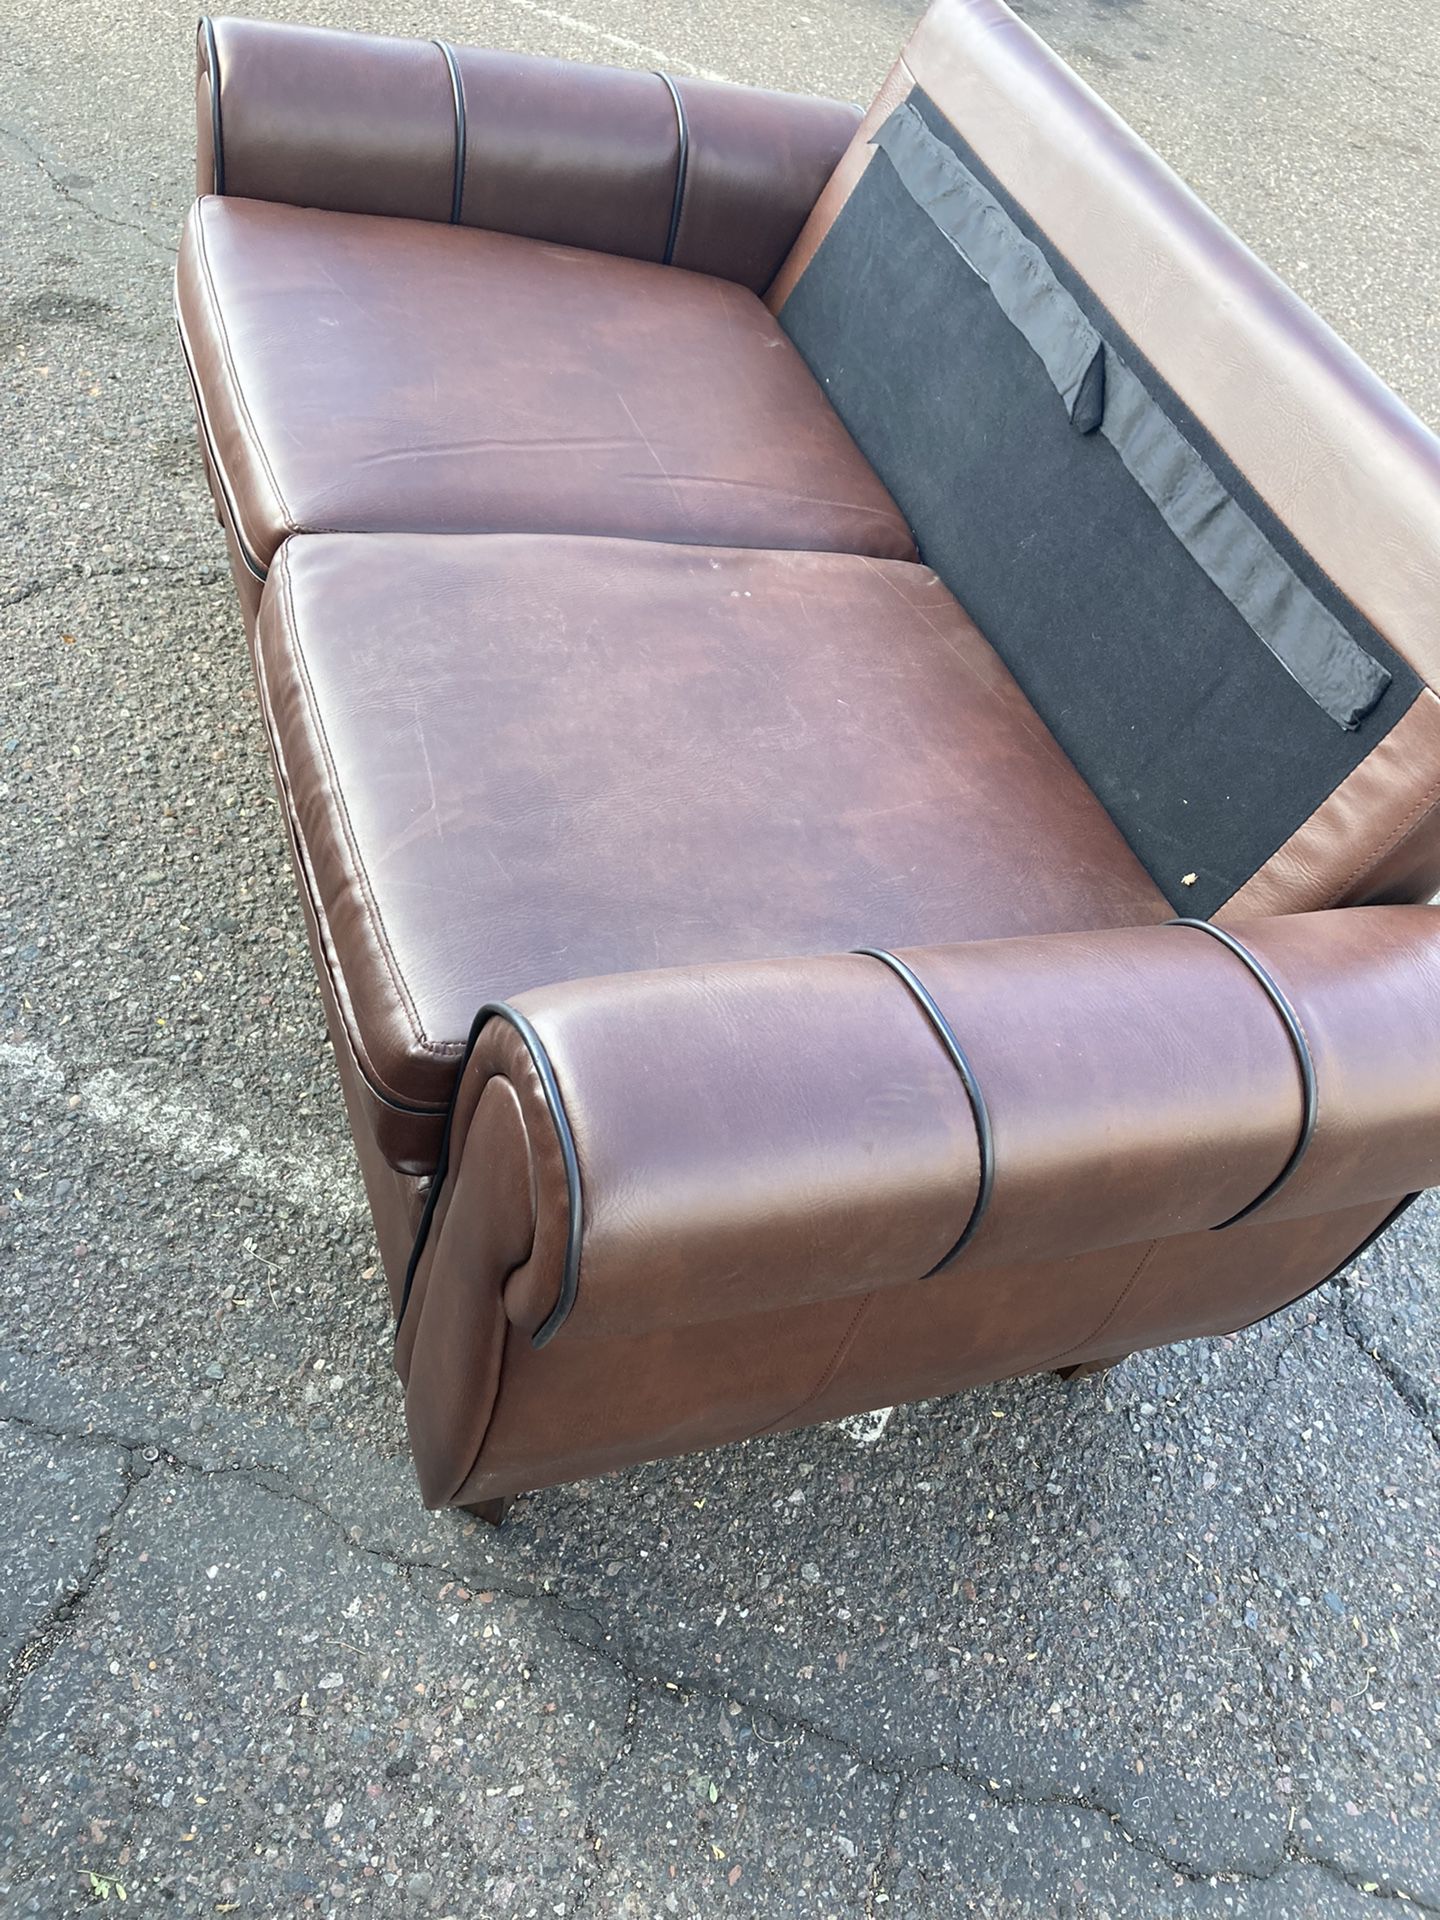 Roho Cushion 1R119LPC for Sale in Gilbert, AZ - OfferUp